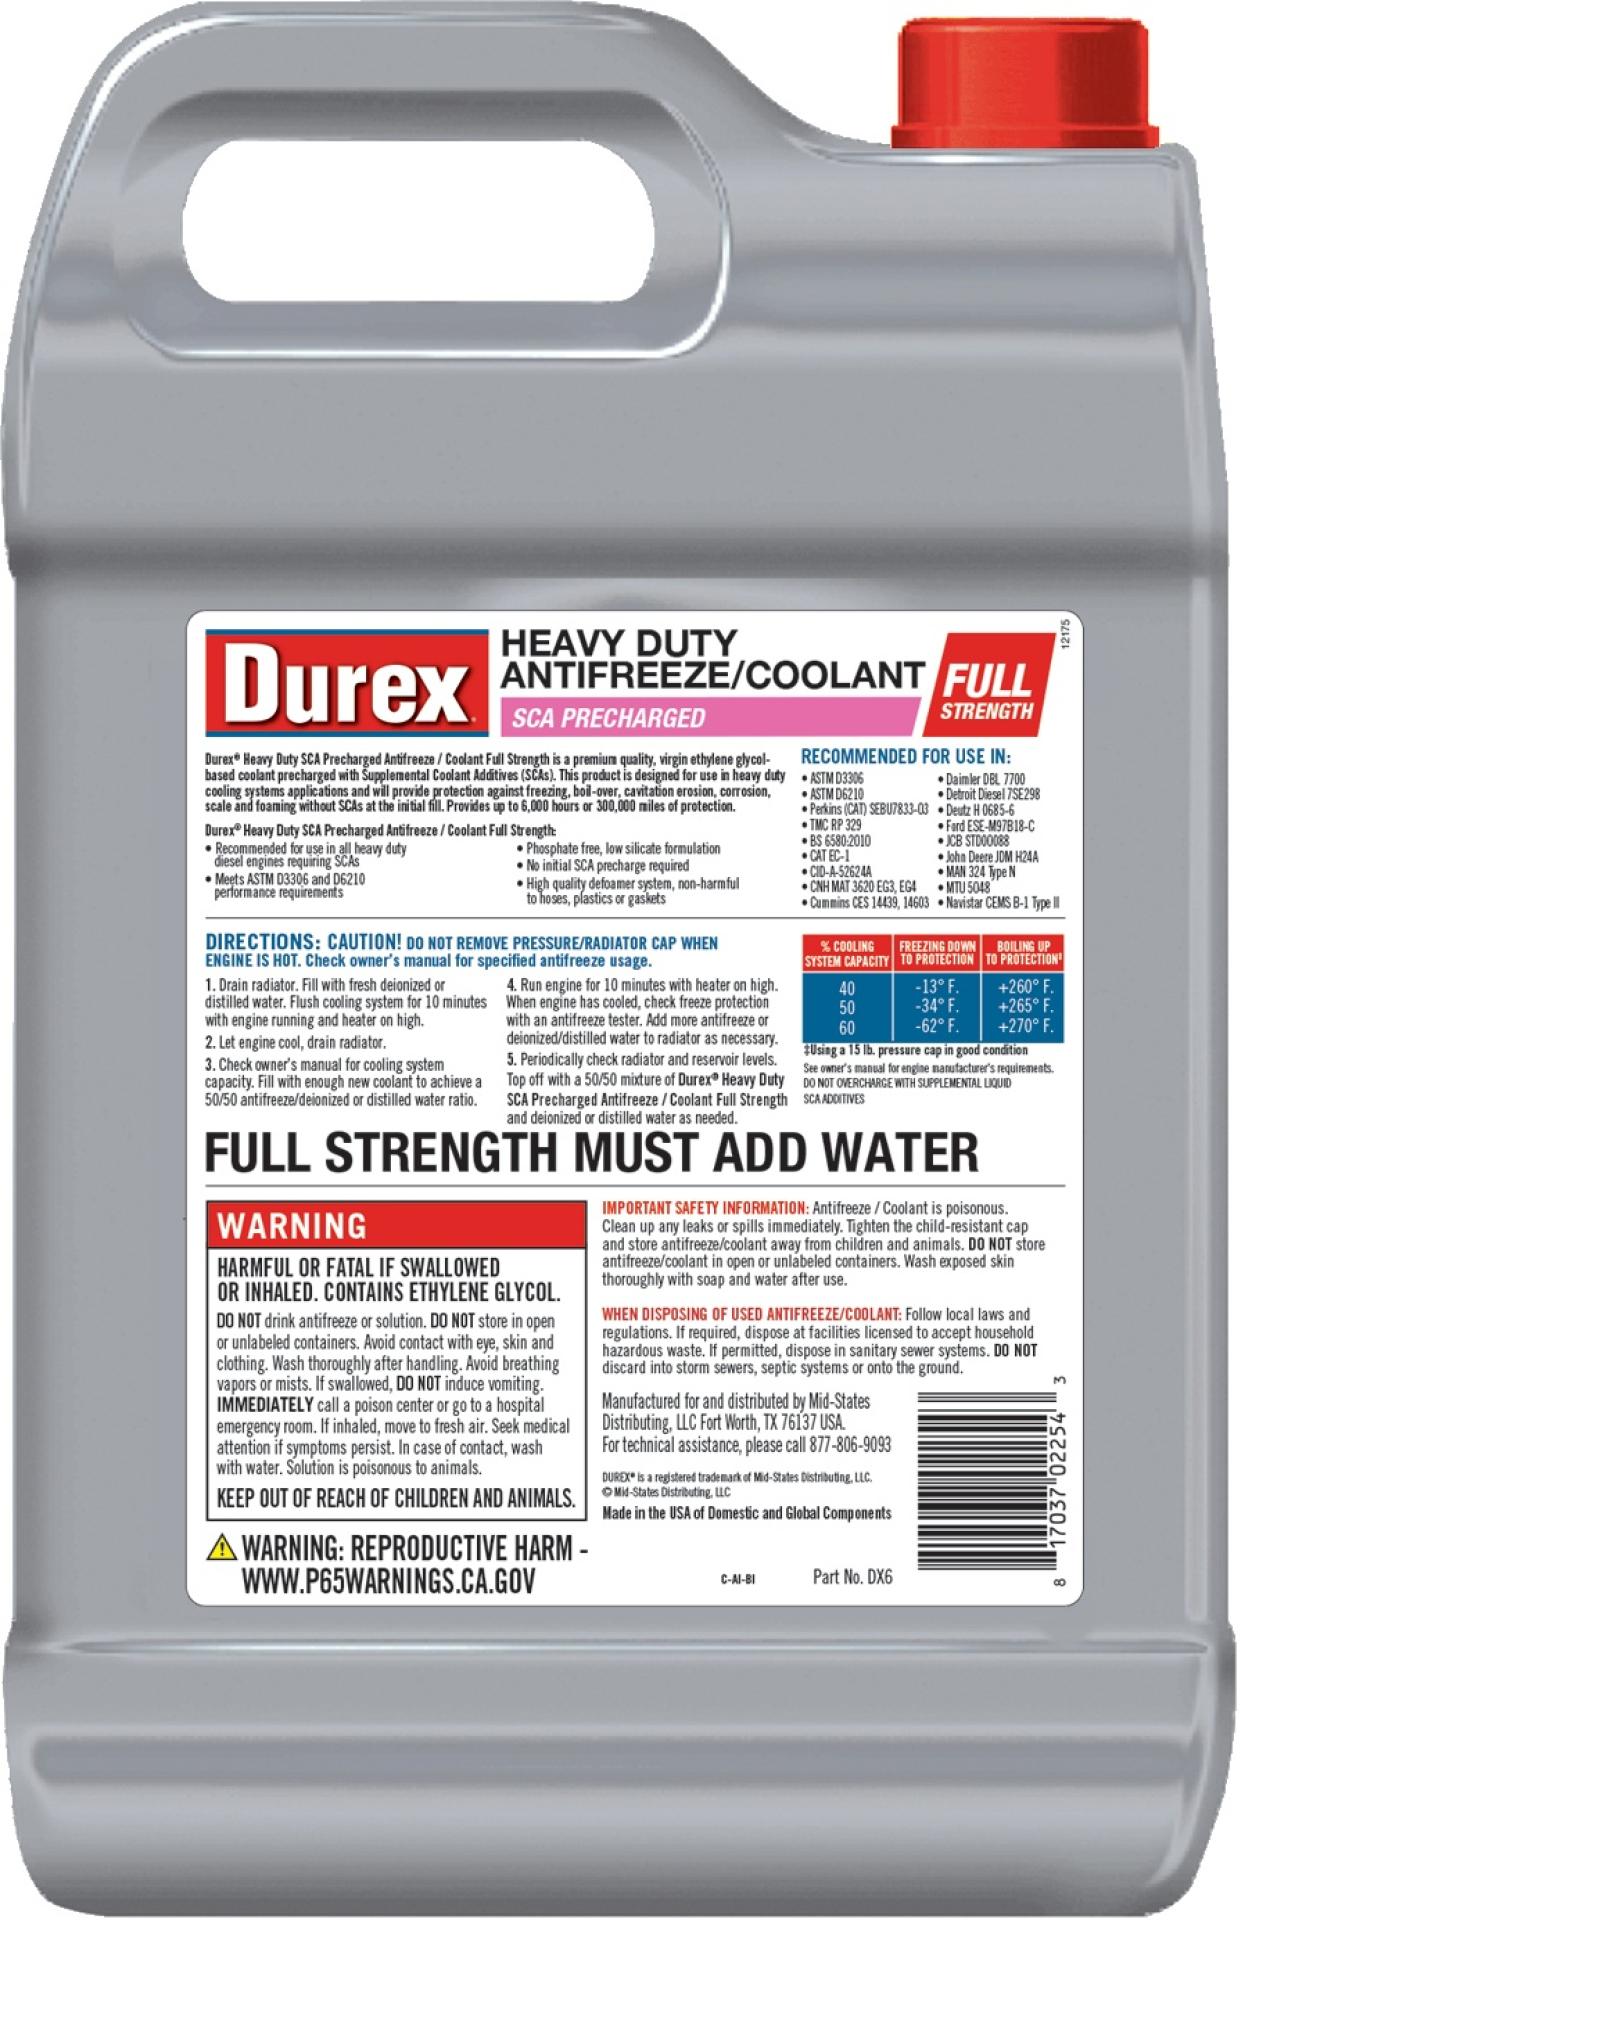 Durex® Heavy Duty SCA Pre-charged Formula Antifreeze/Coolant